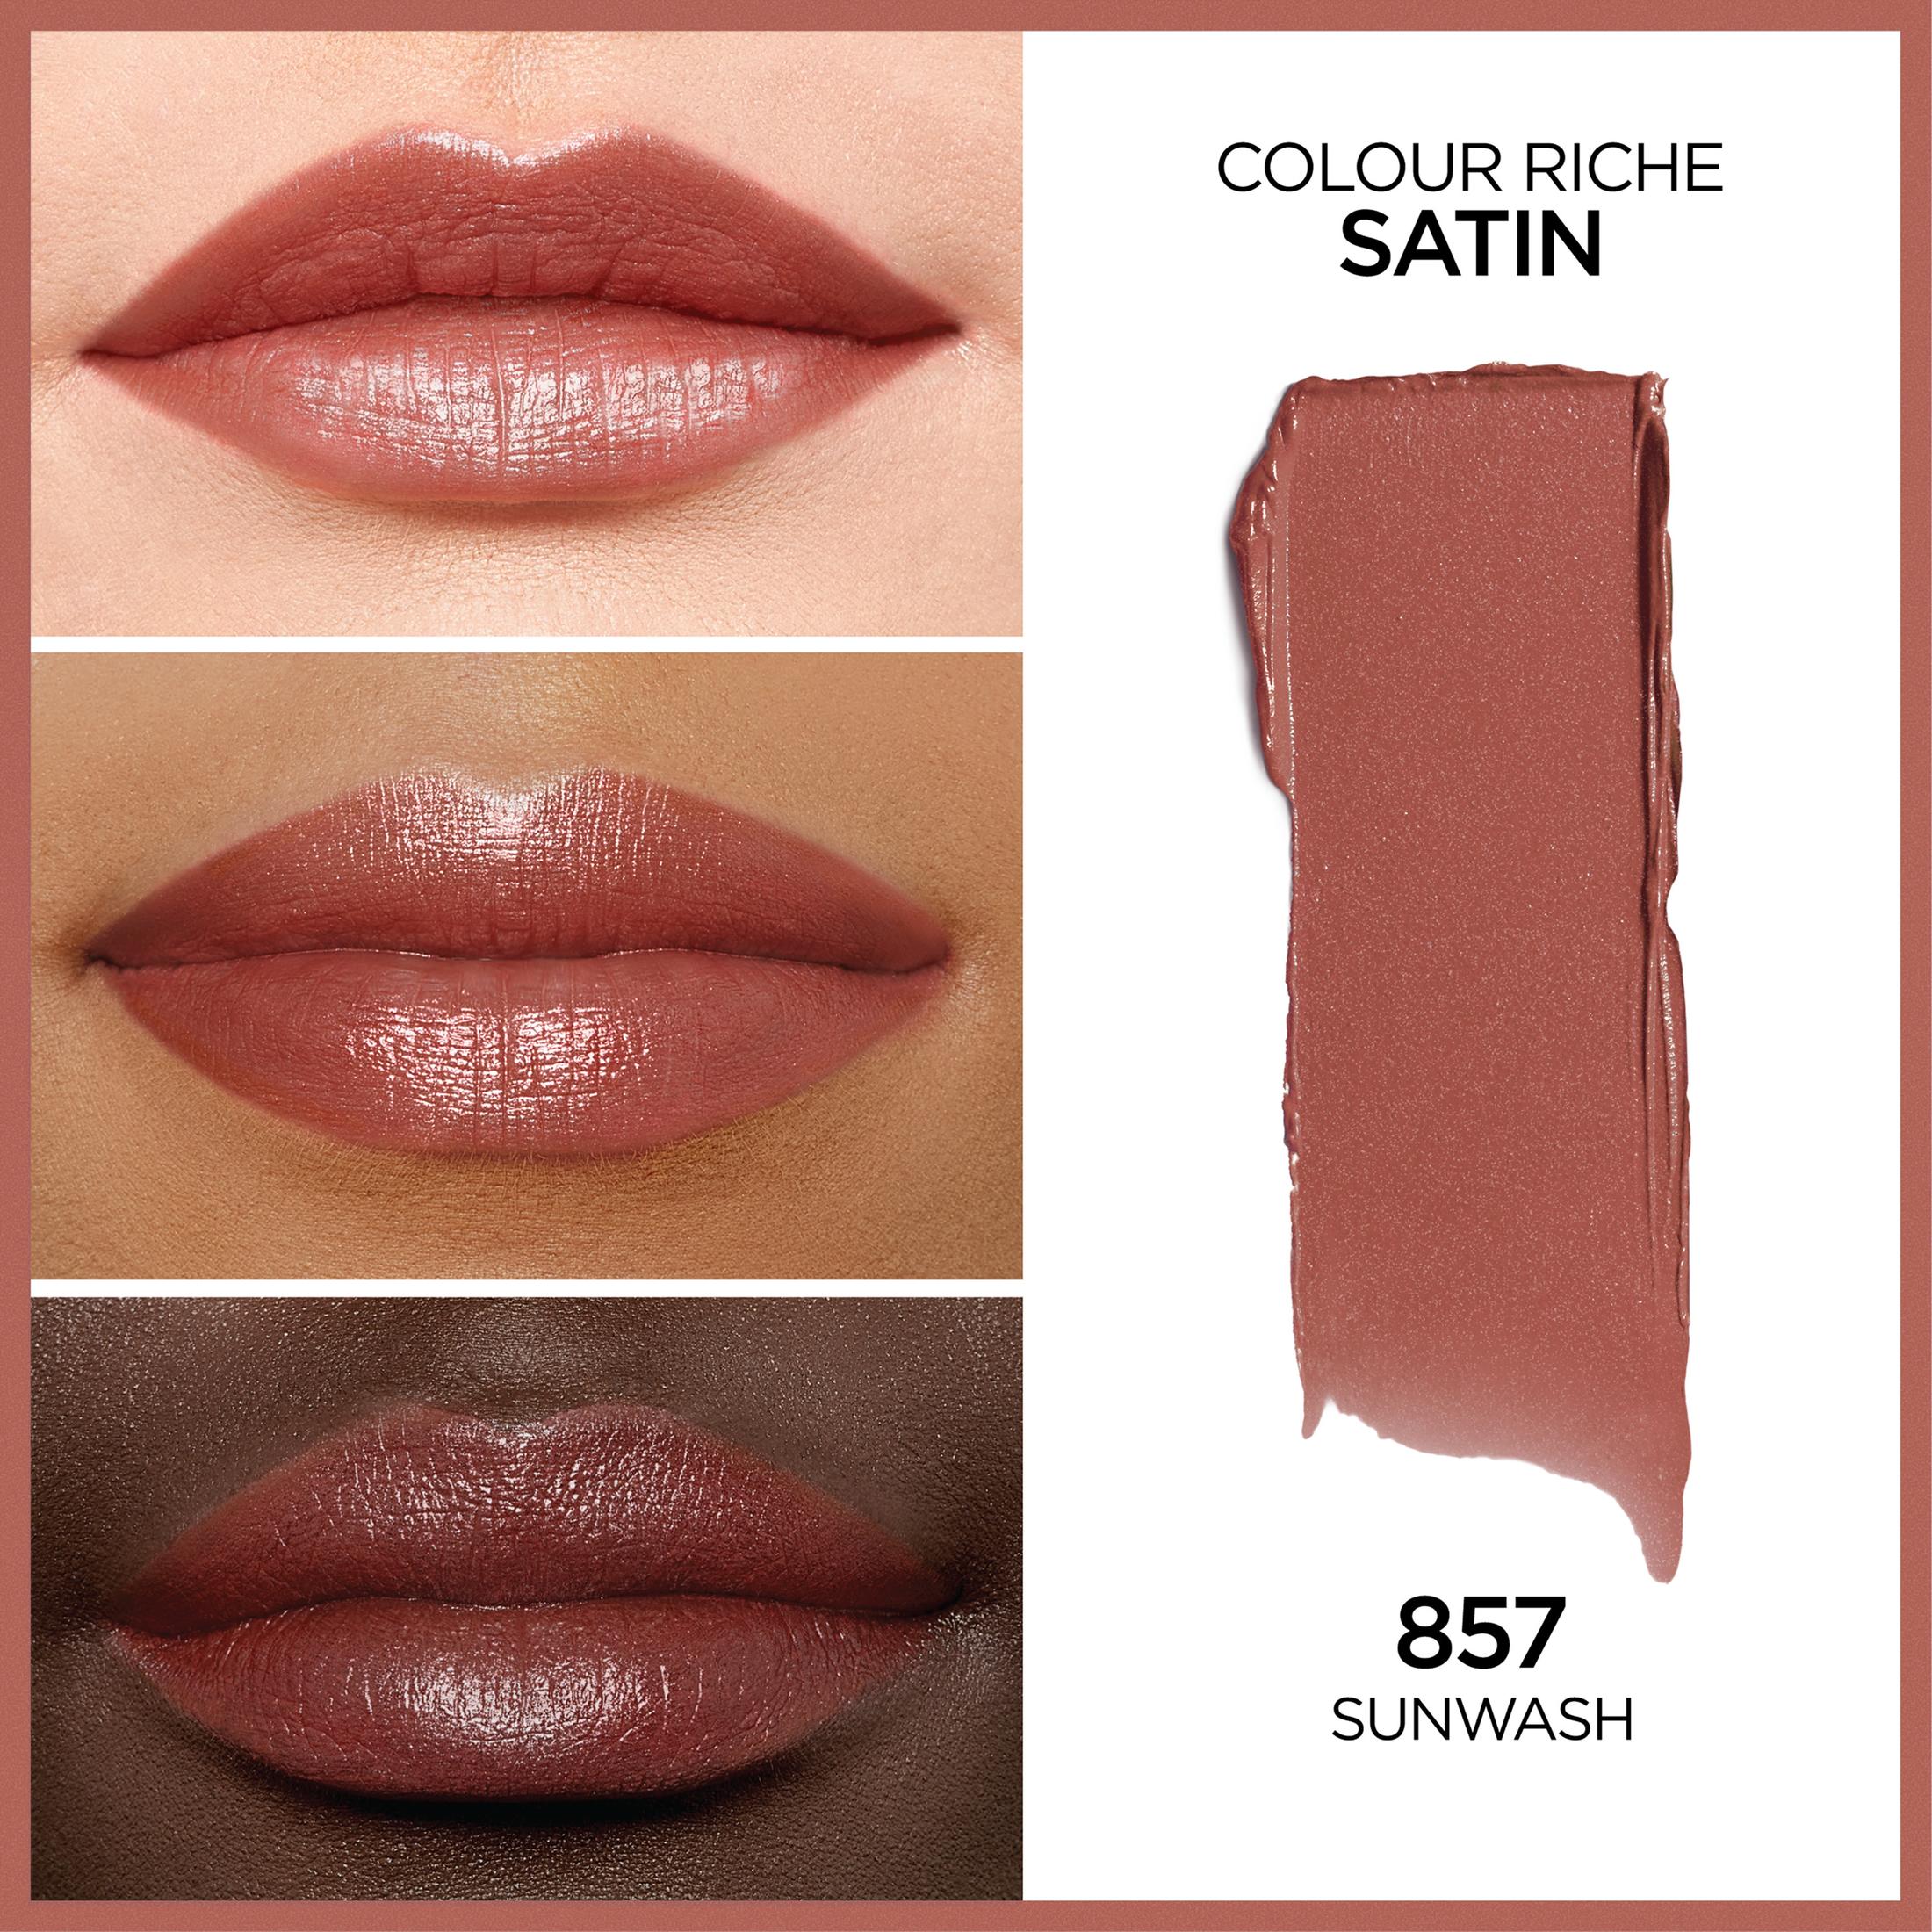 L'Oreal Paris Colour Riche Original Satin Lipstick for Moisturized Lips, 857 Sunwash - image 2 of 5